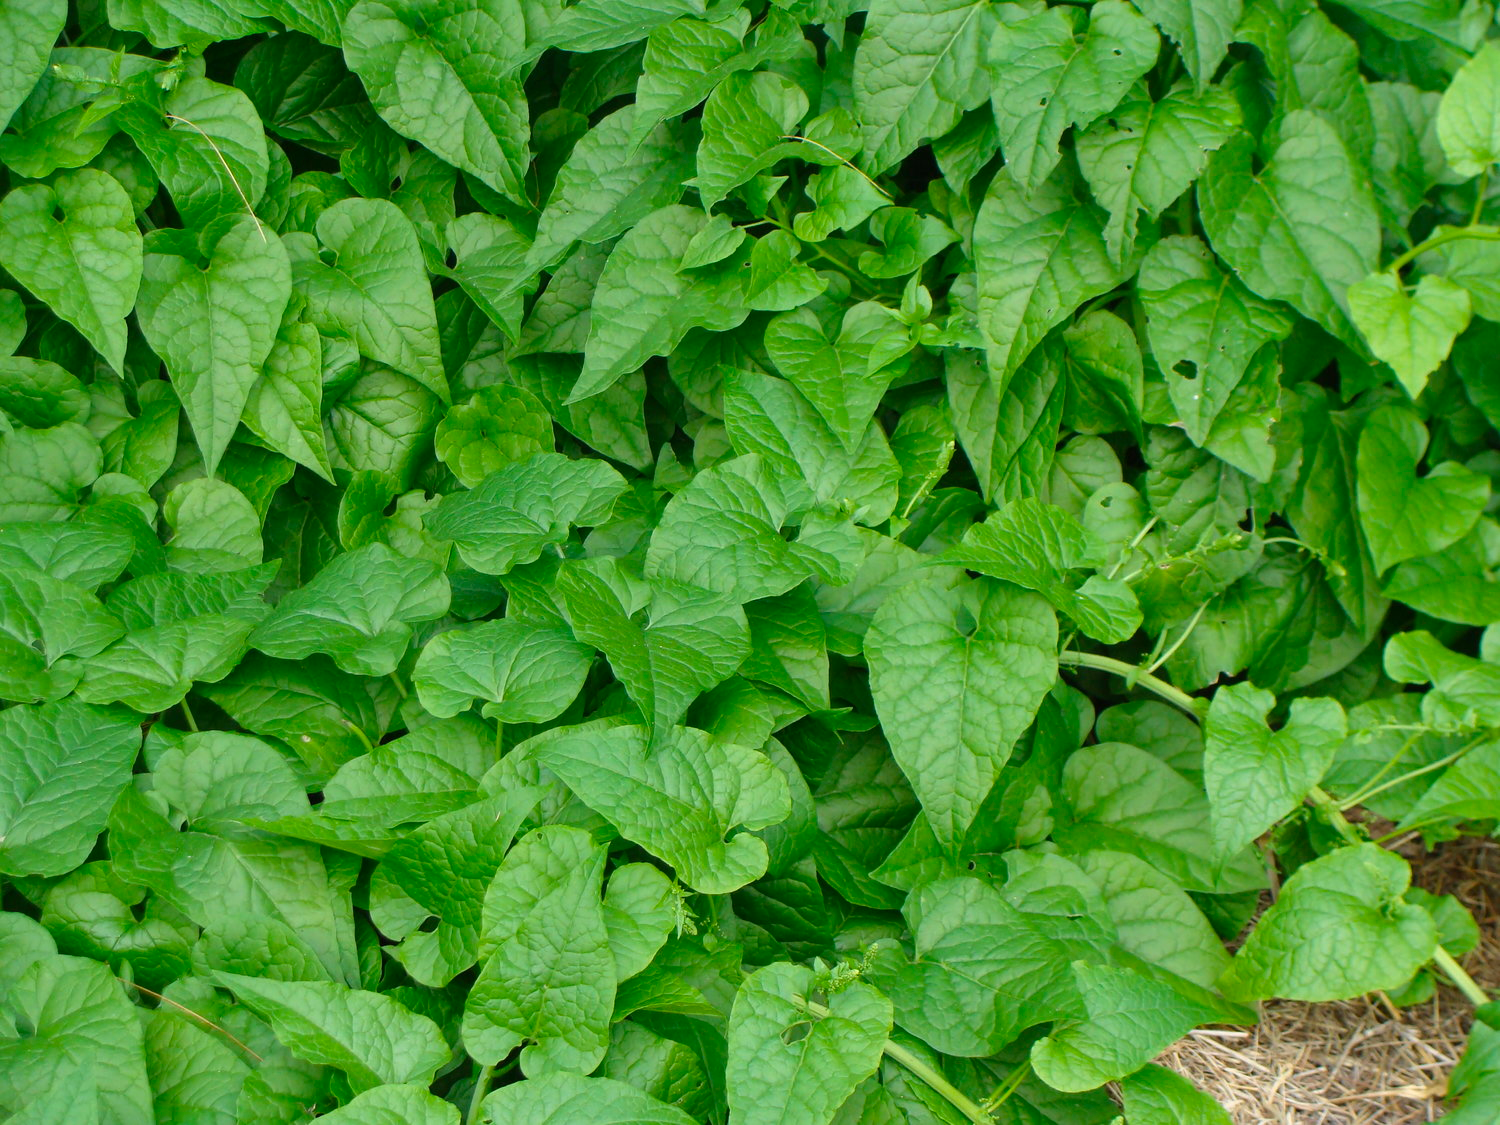 Hablitiza tamnoides (Caucasian Spinach)